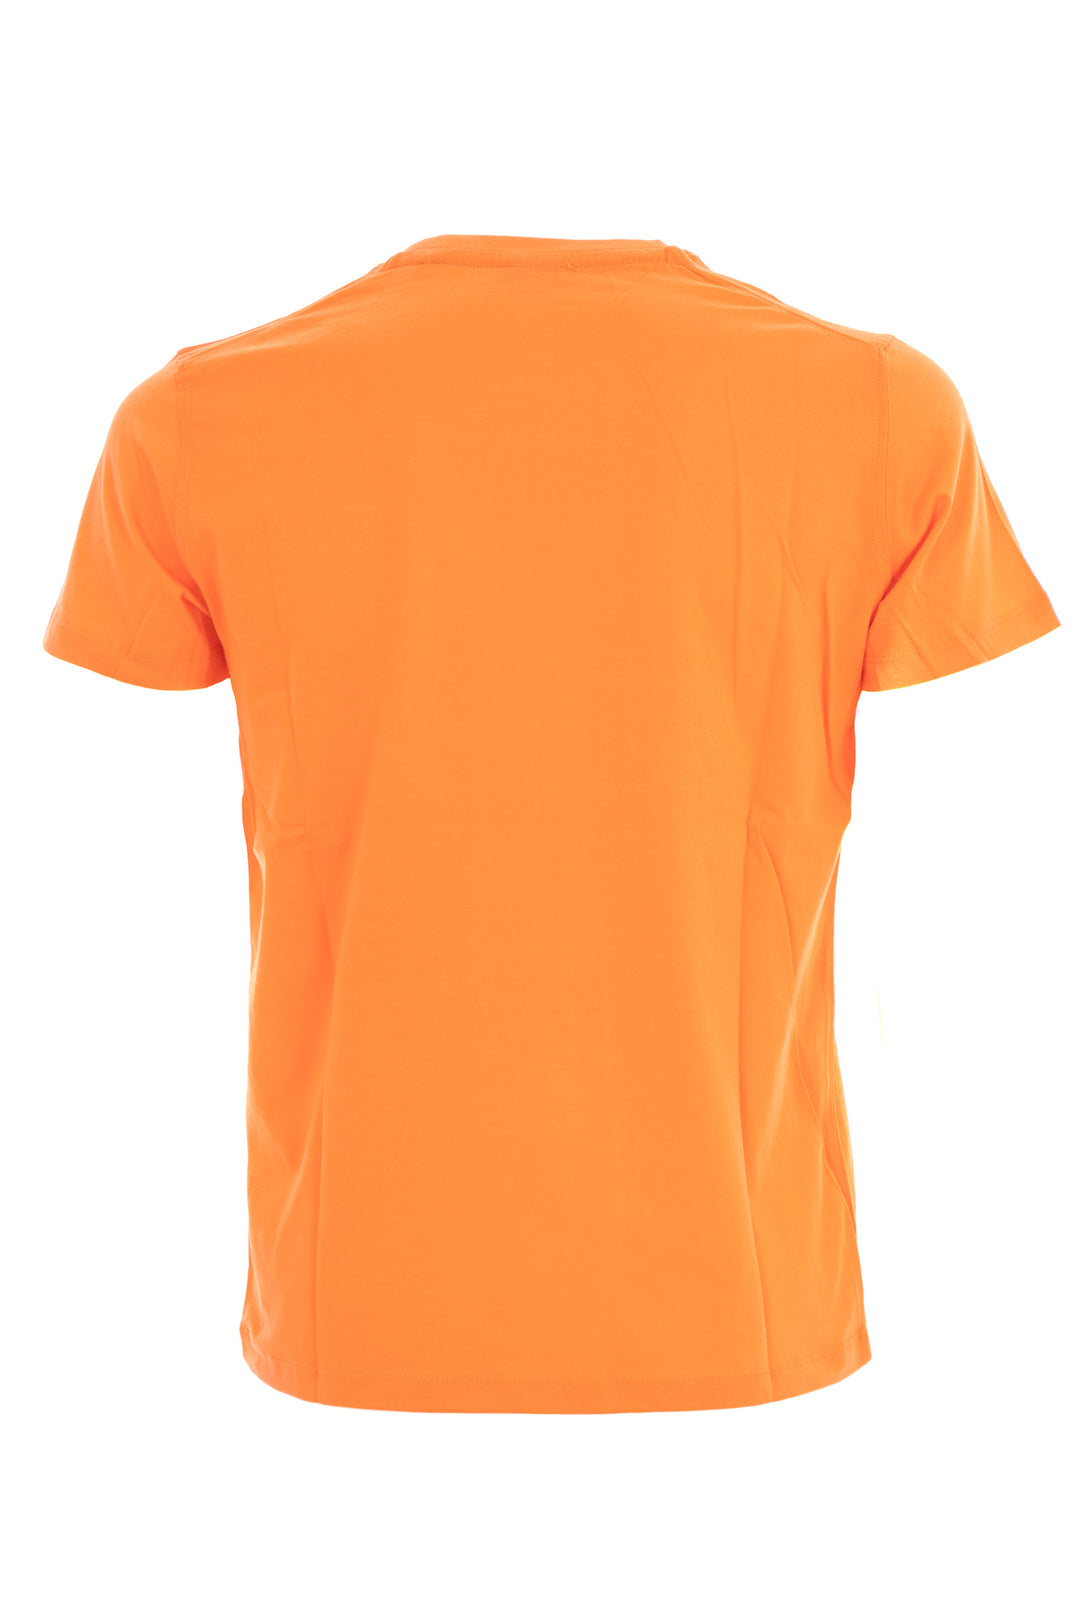 U.S. POLO ASSN. T-Shirt in cotone arancio - Mancinelli 1954